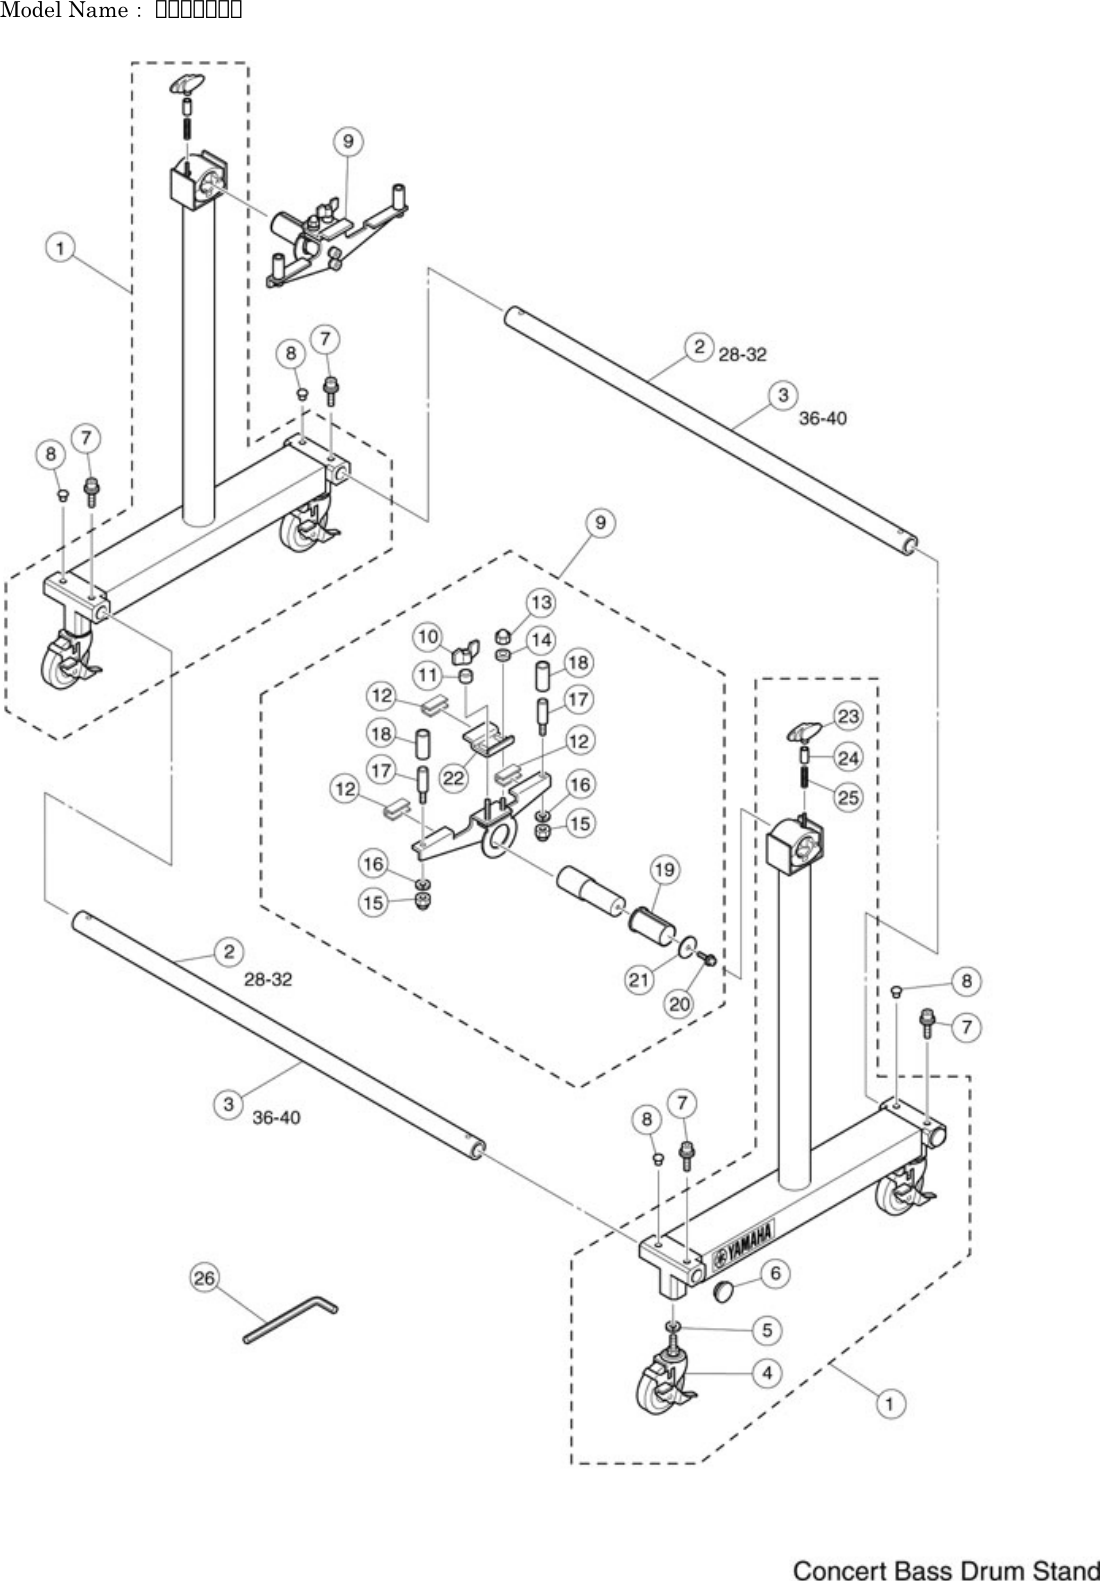 Page 1 of 2 - Yamaha PARTS BS-7053 Diagram